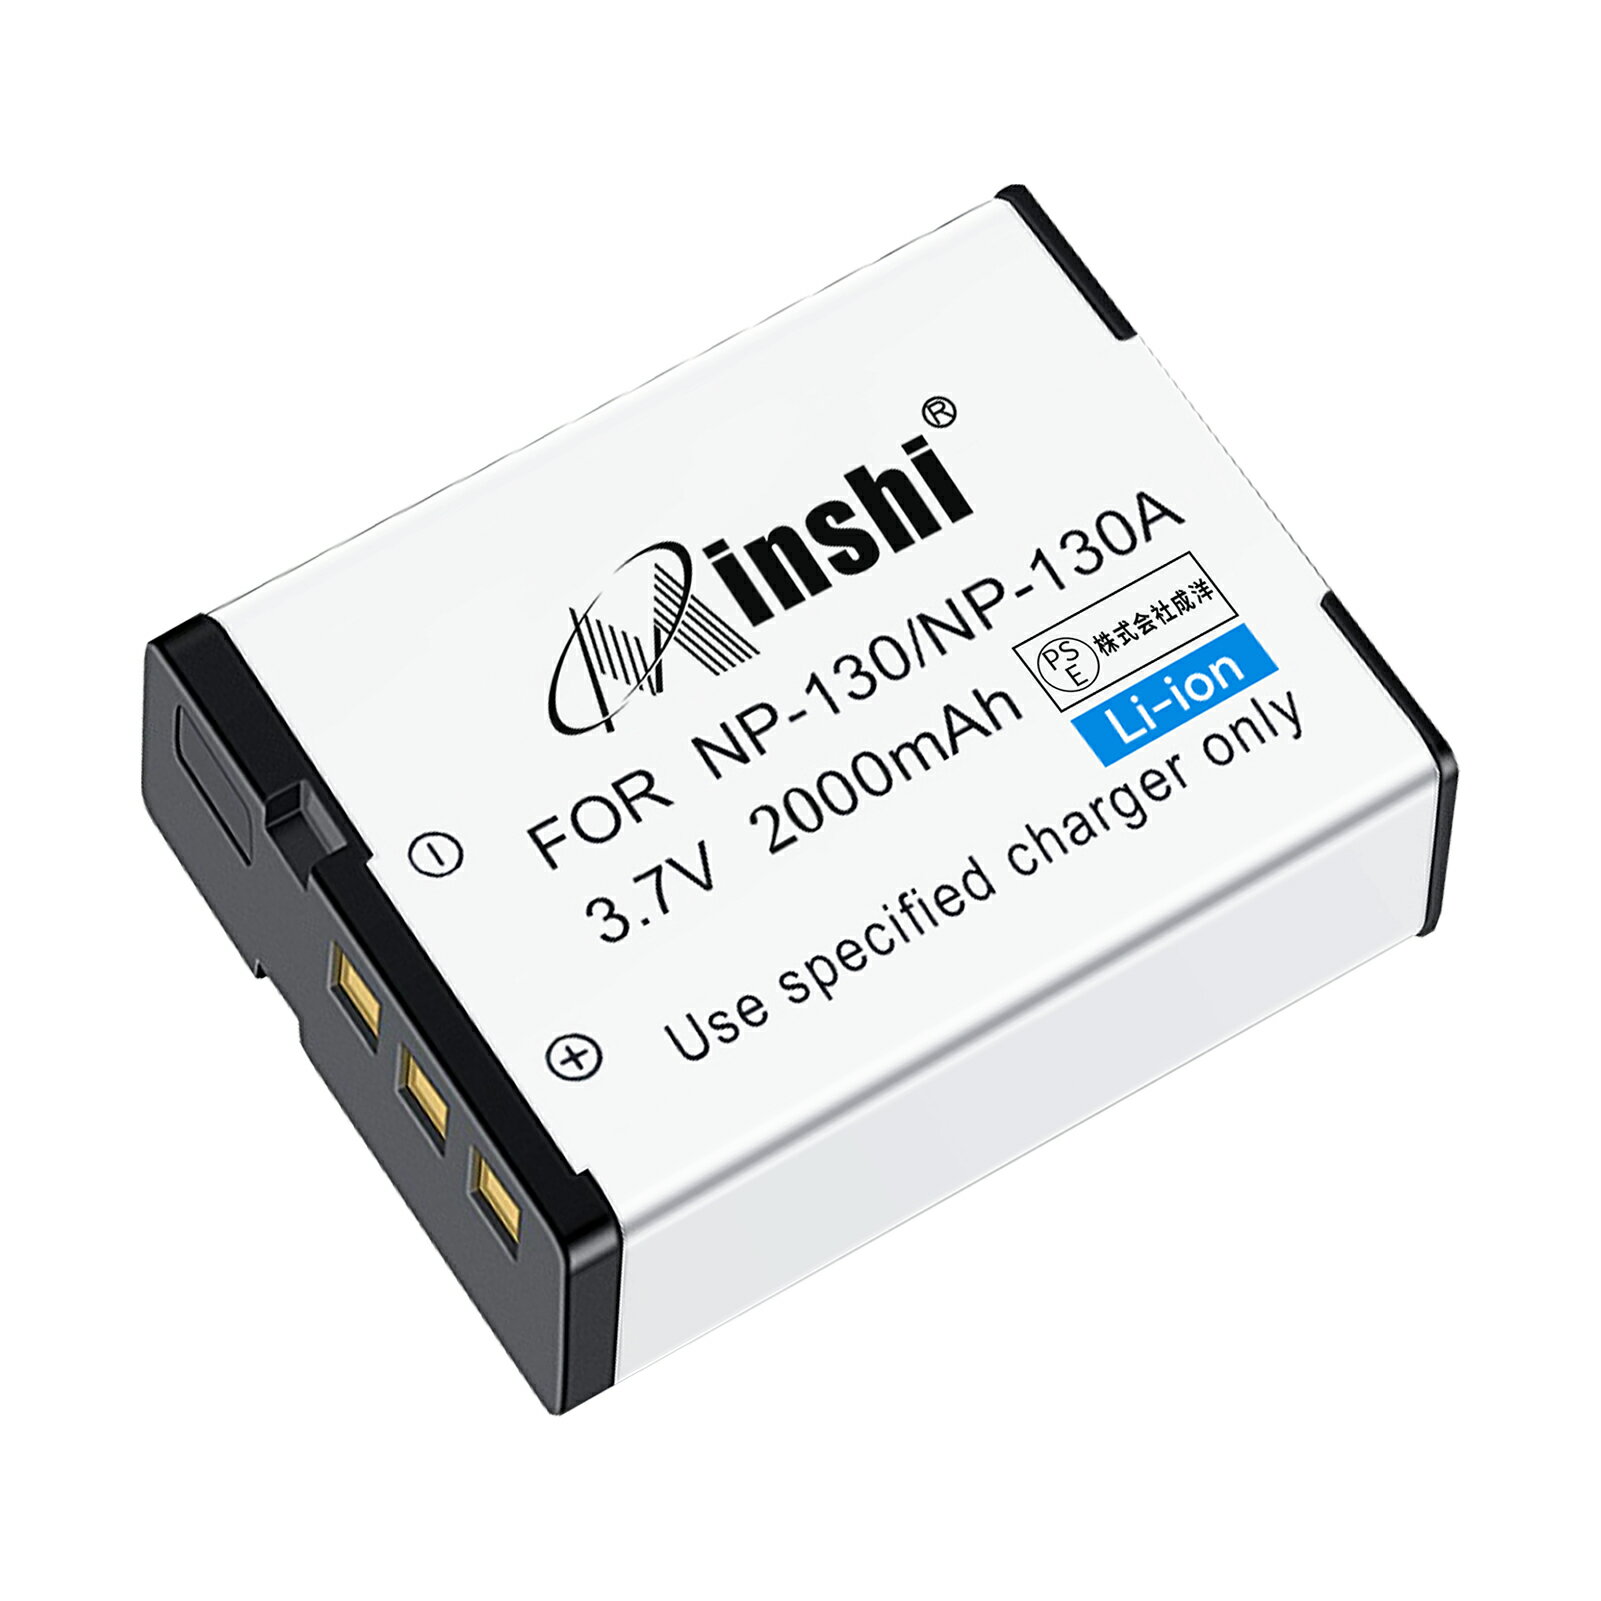 minshi 新品 Casio EX-ZR100 互換バッテリー 2000mAh XAB 高品質交換用リチャージブル カメラバッテリー リチウムイオンバッテリー デジタルカメラ デジカメ 充電池 PSE認証 1年間保証 予備バッテリー